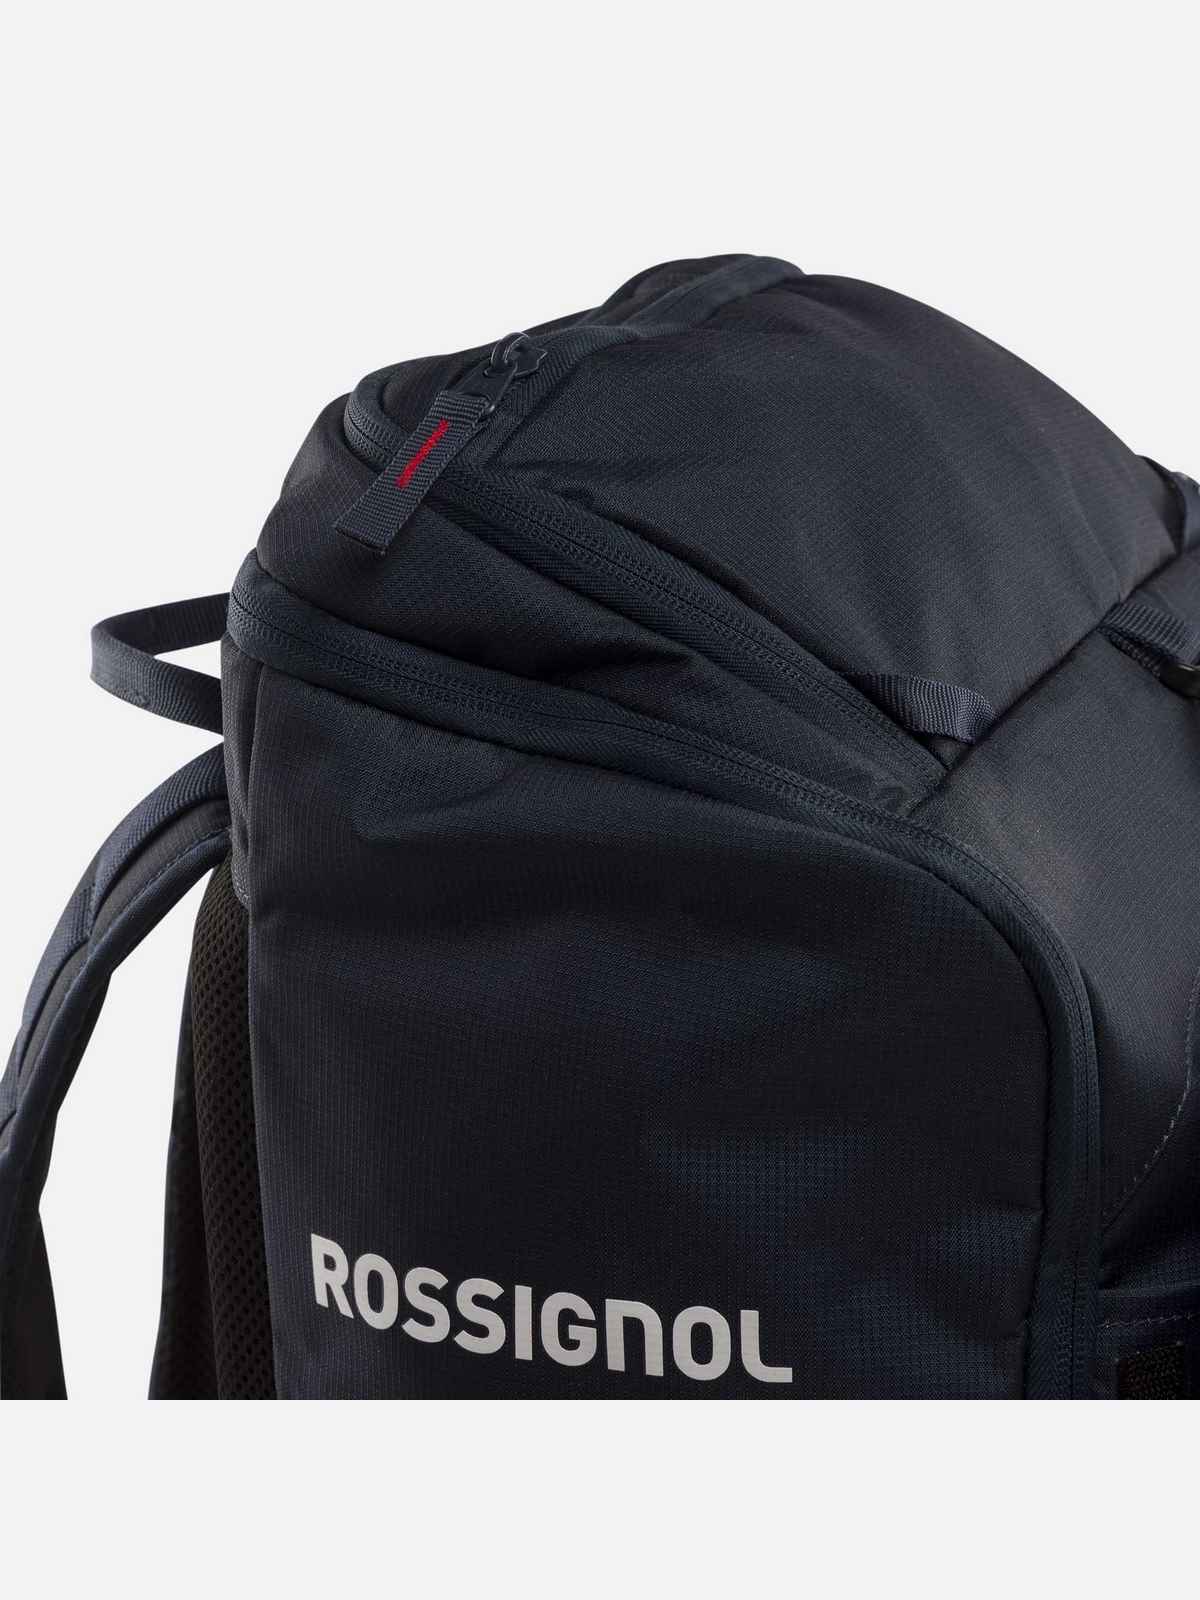 Plecak na buty narciarskie ROSSIGNOL STRATO COMPACT BOOT BAG